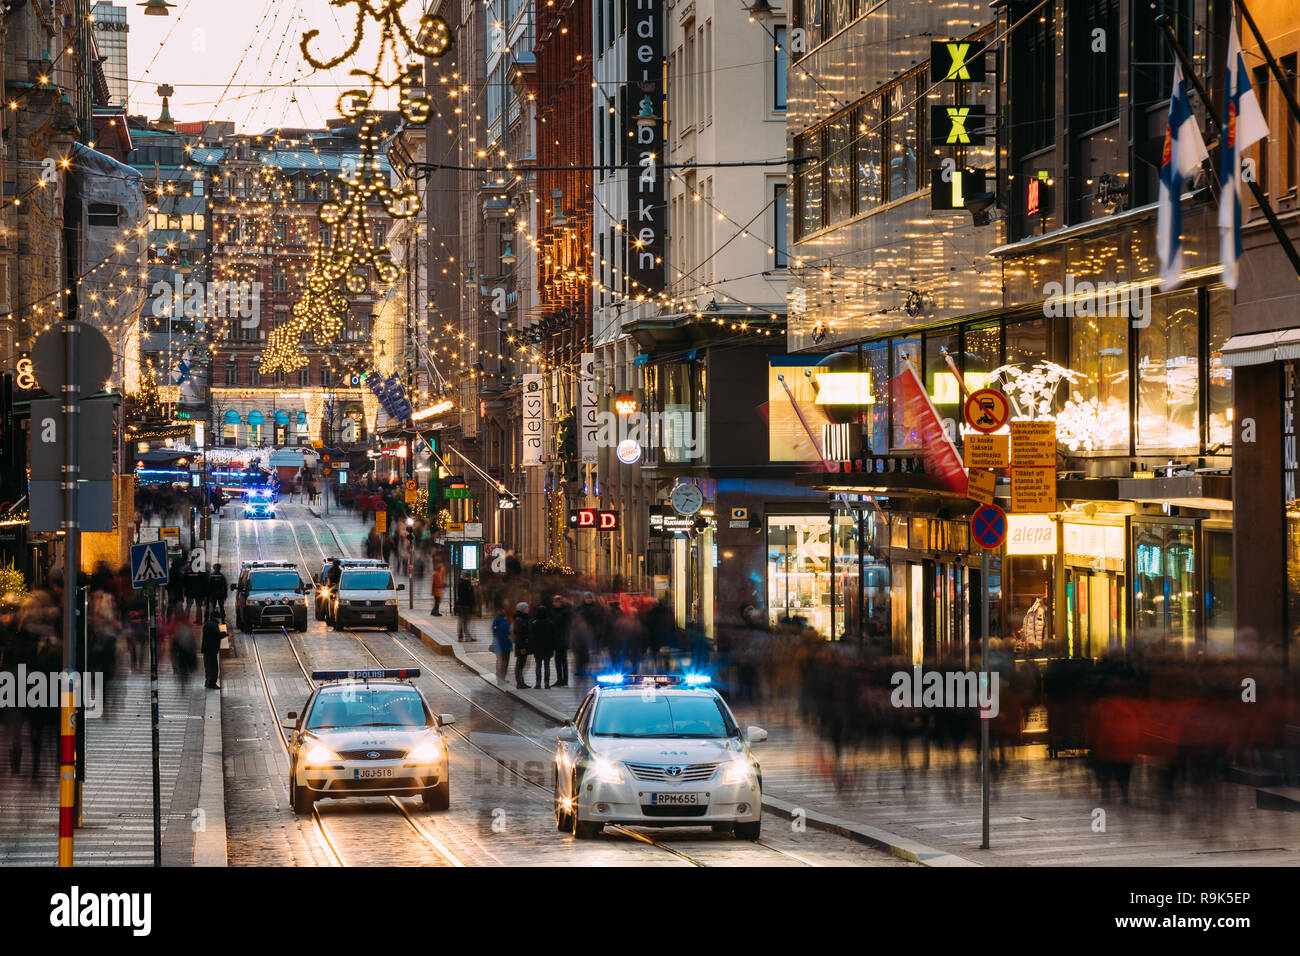 Helsinki, Finland - December 6, 2016: Police Provide Security On Aleksanterinkatu Street. Festive Illuminations View Of Aleksanterinkatu Street During Stock Photo